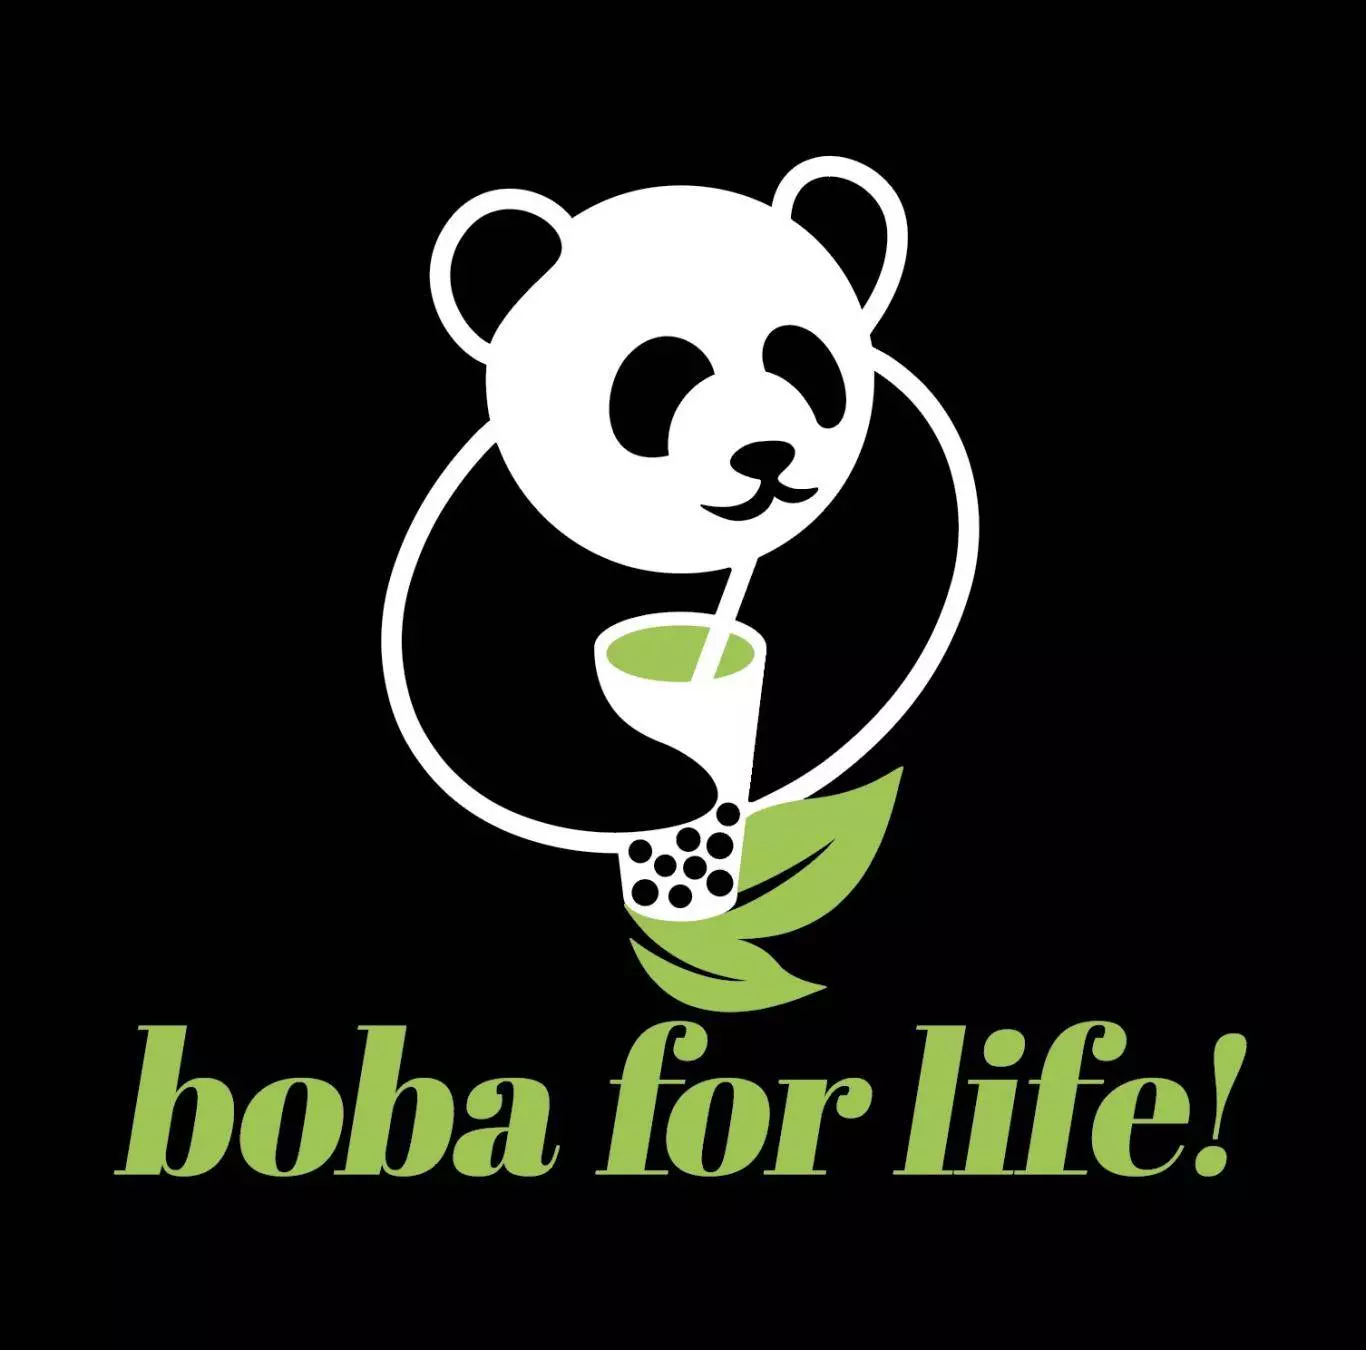 Boba for life logo with a panda drinking green tea.